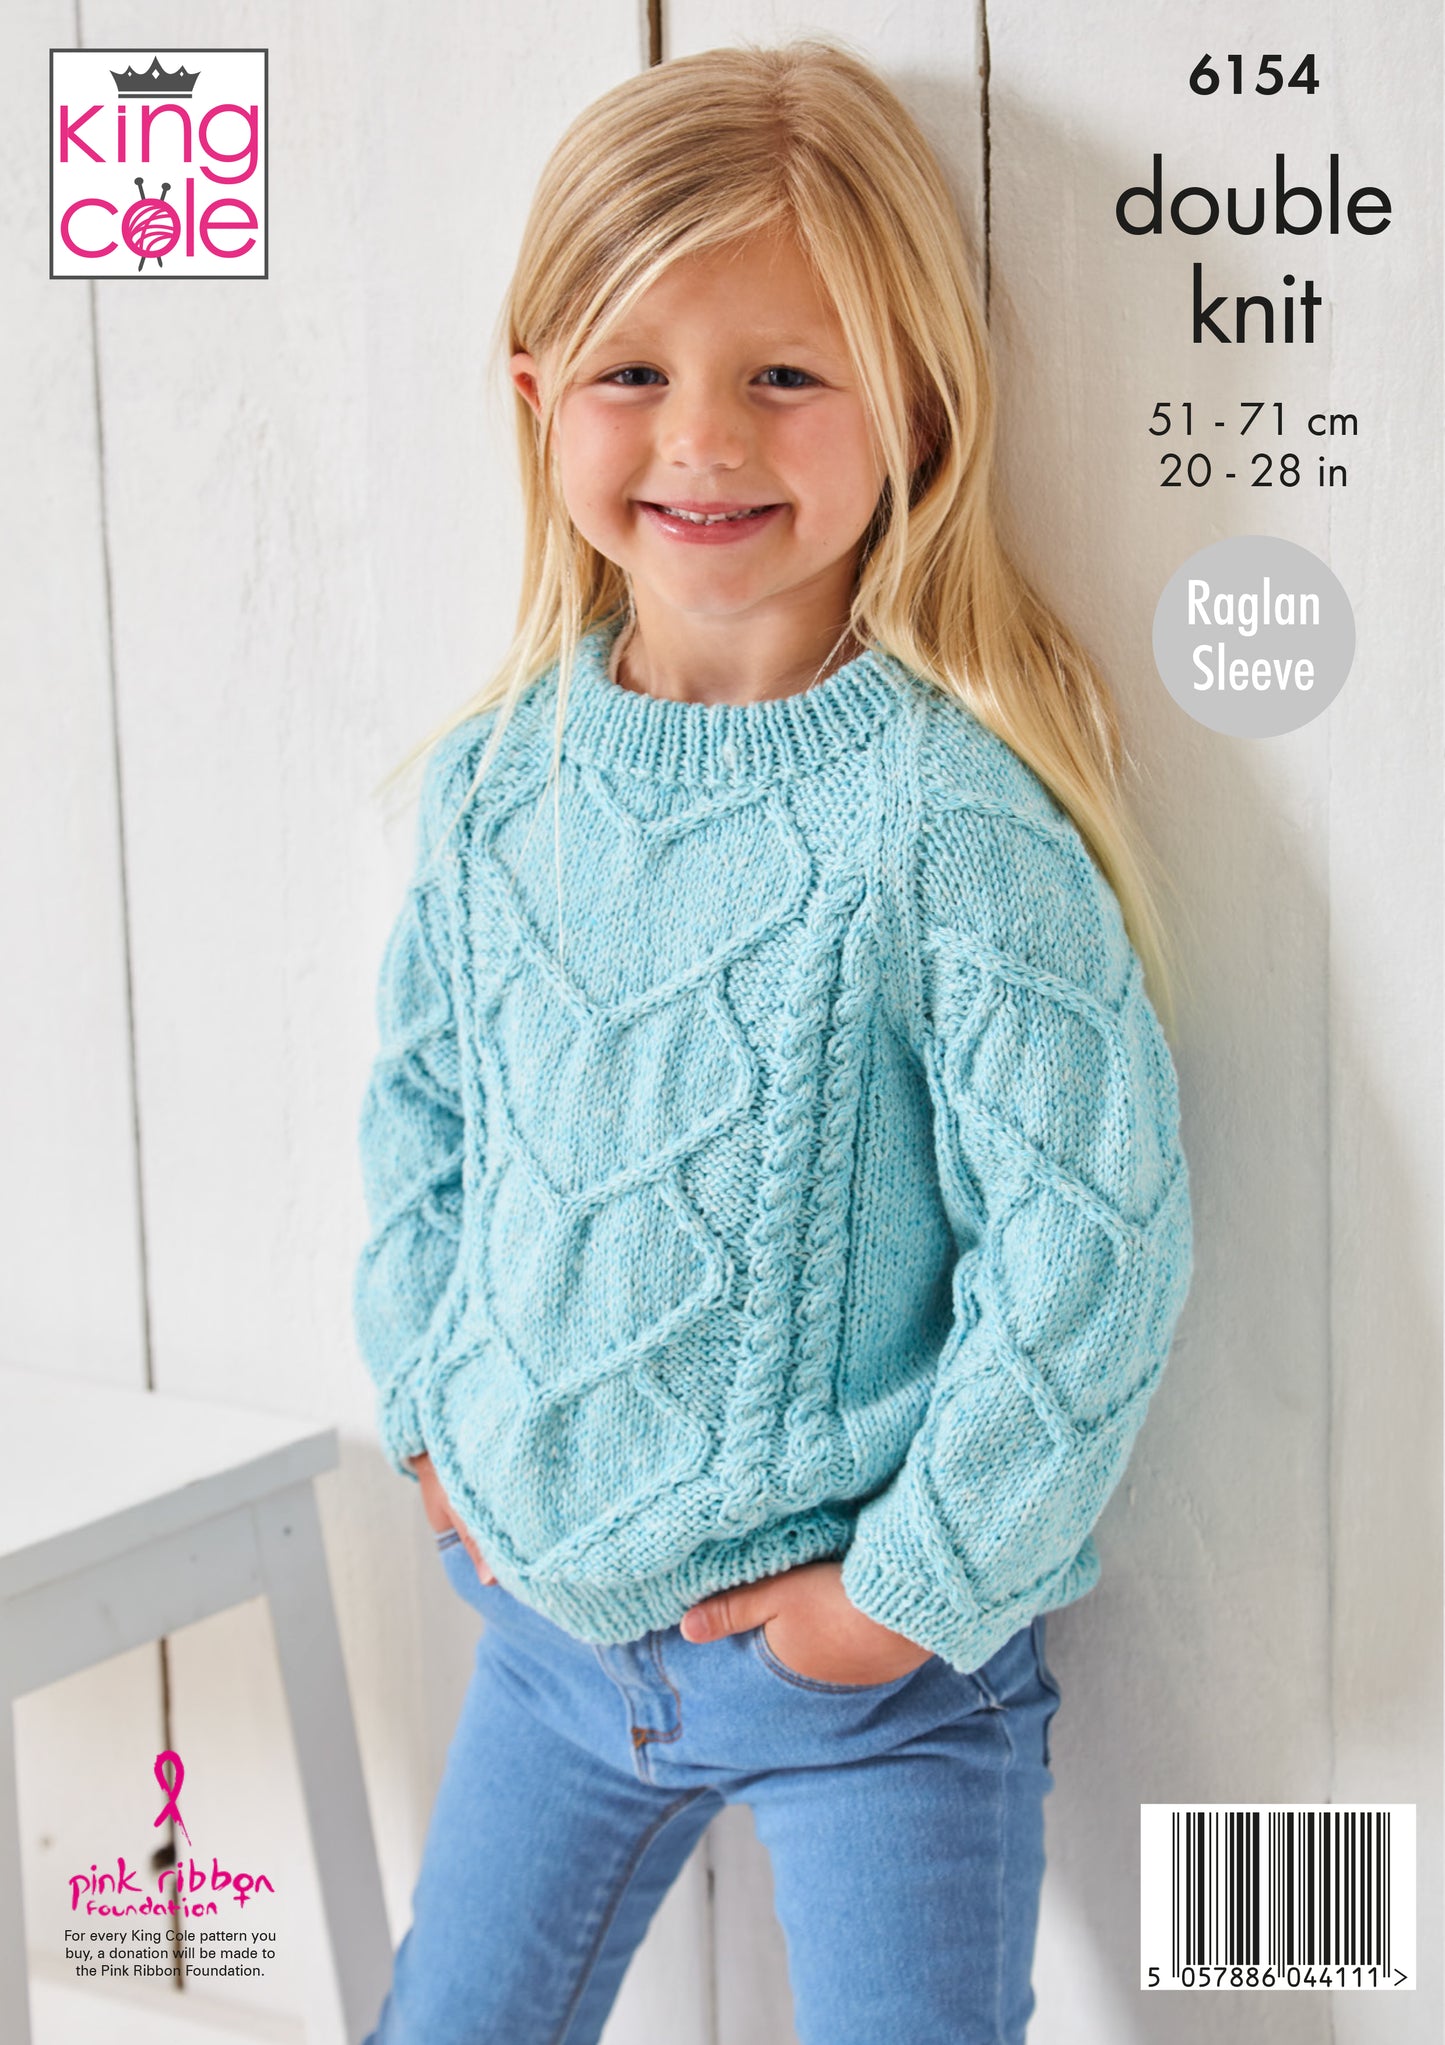 Knitting Pattern 6154 - Sweater & Cardigan Knitted in Simply Denim DK